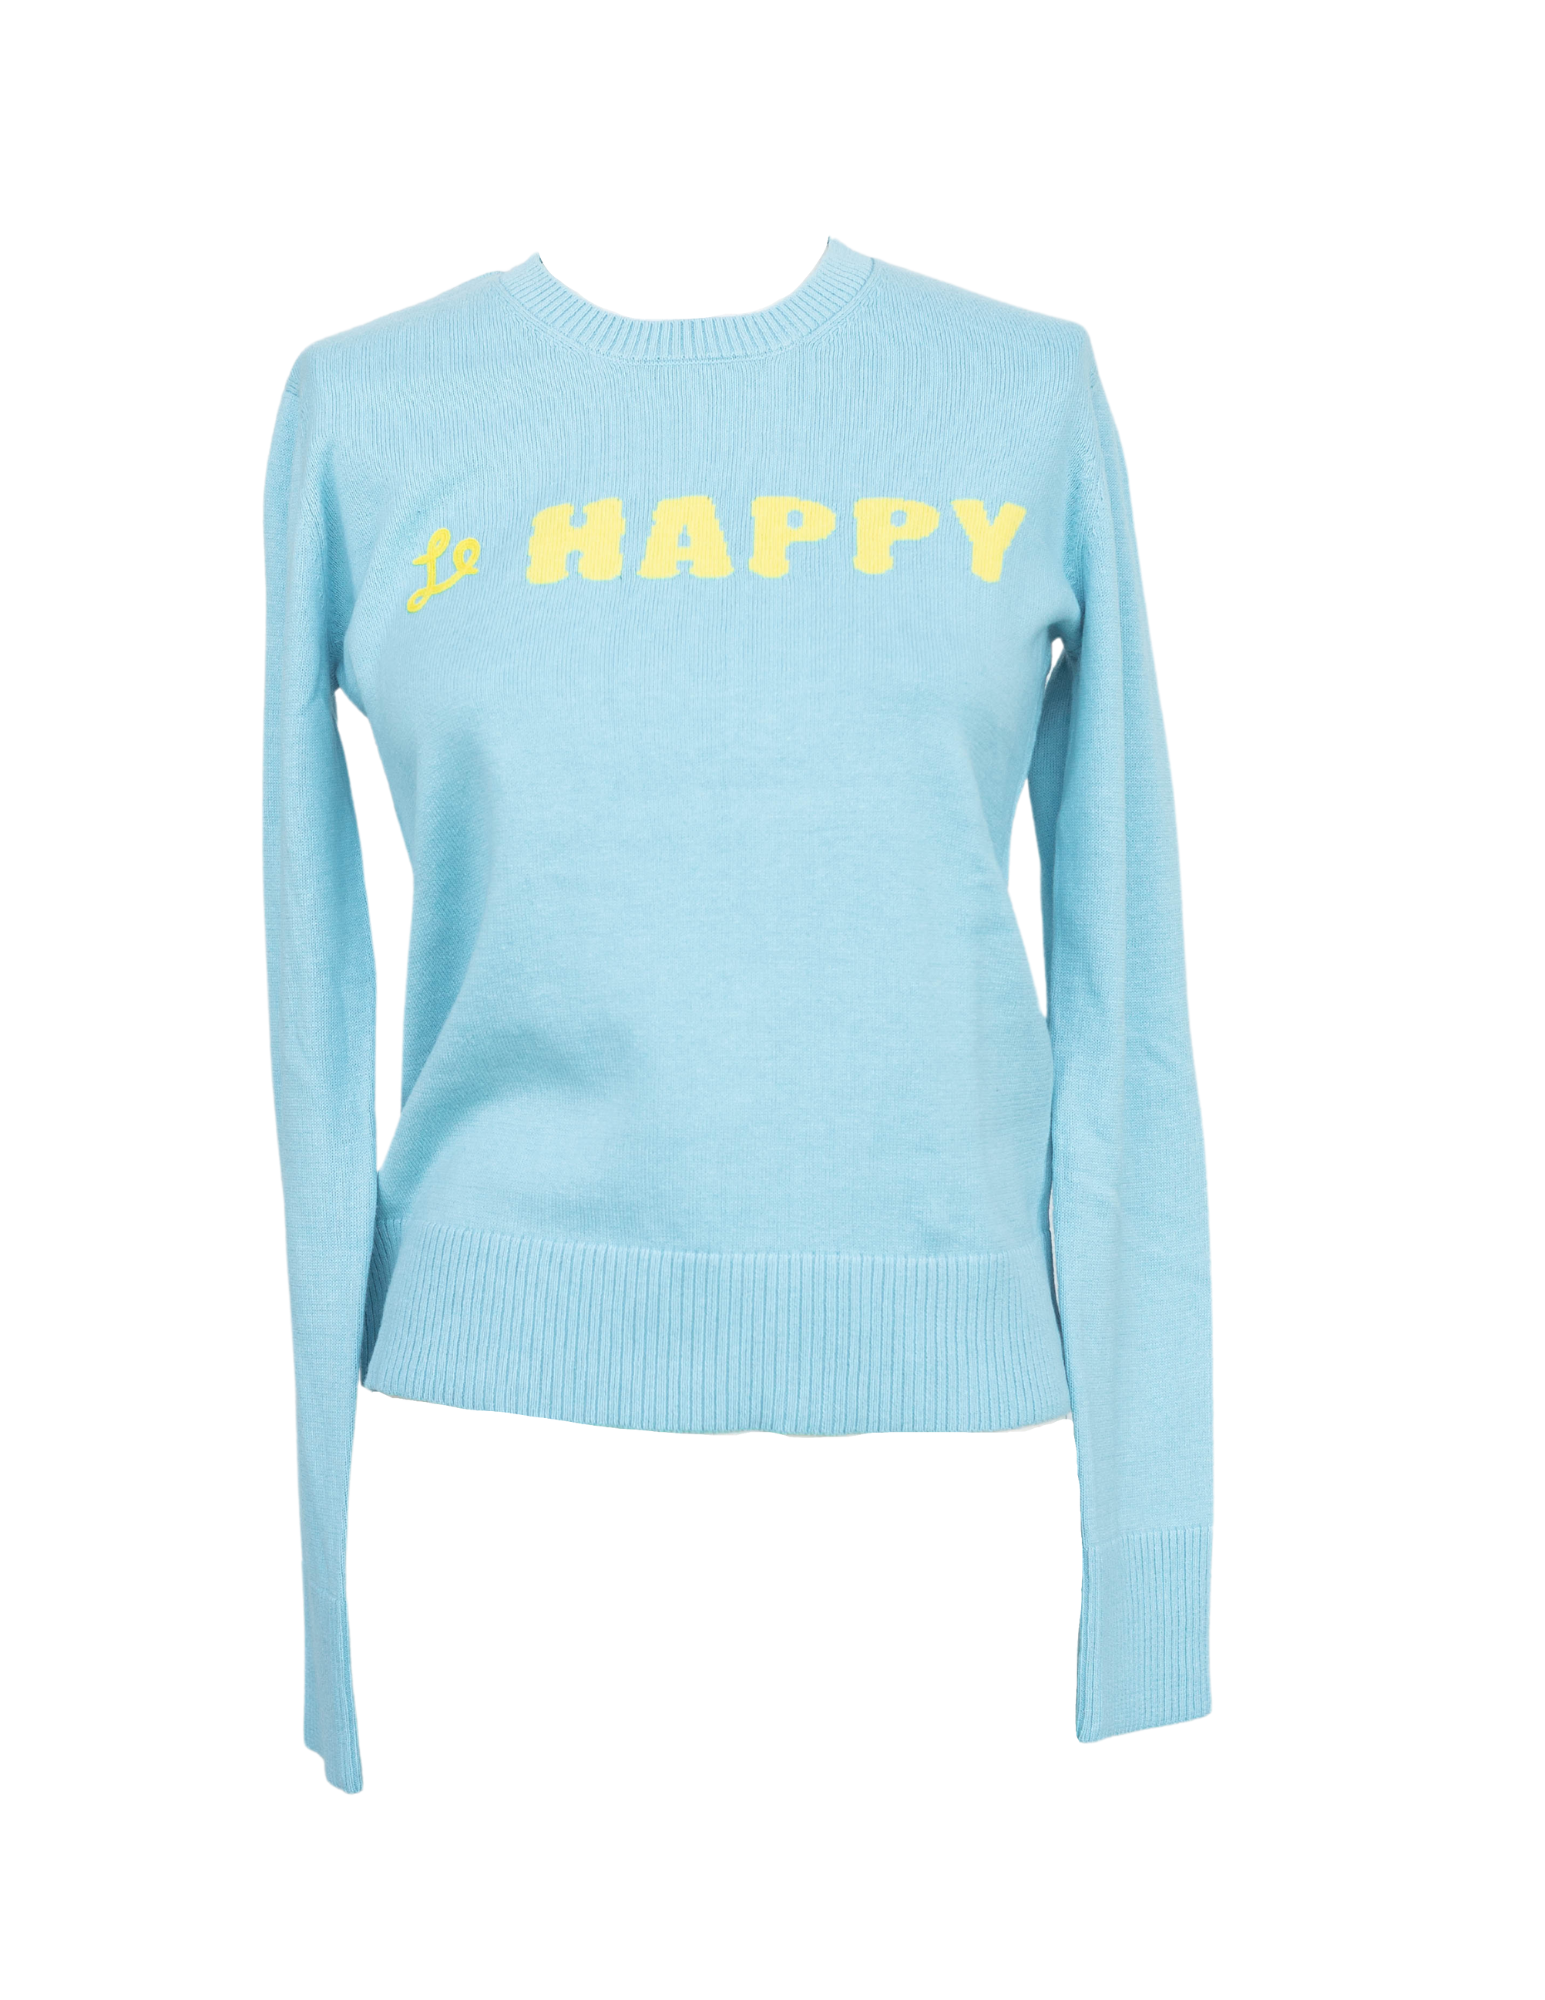 Liz Le Happy Sweater - Saltwater